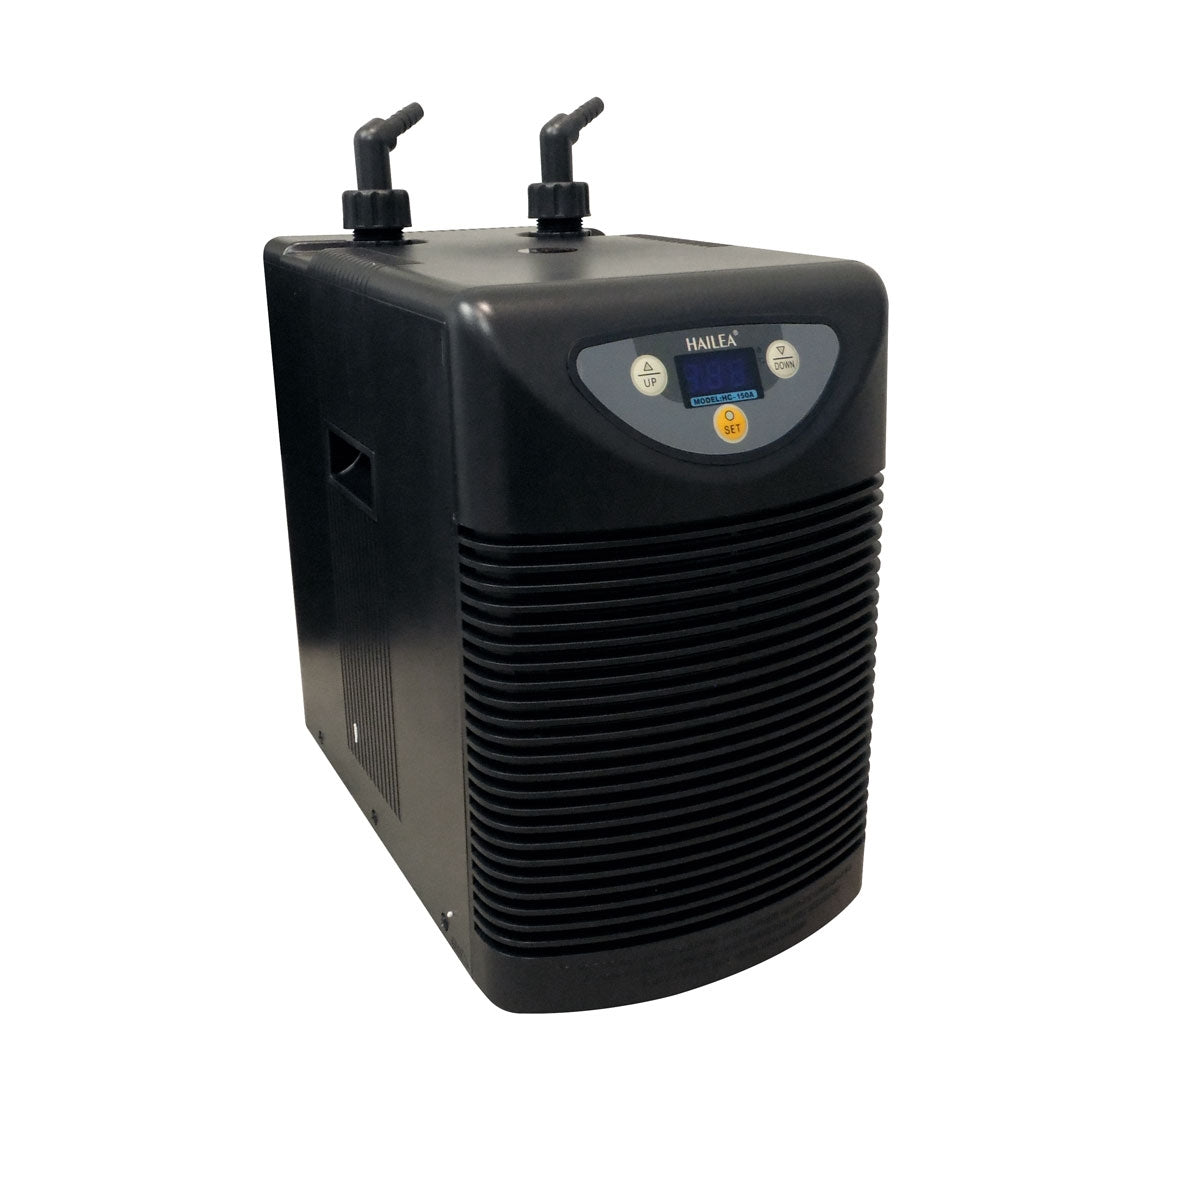 HAILEA Wasserkühler – Modell HC150A